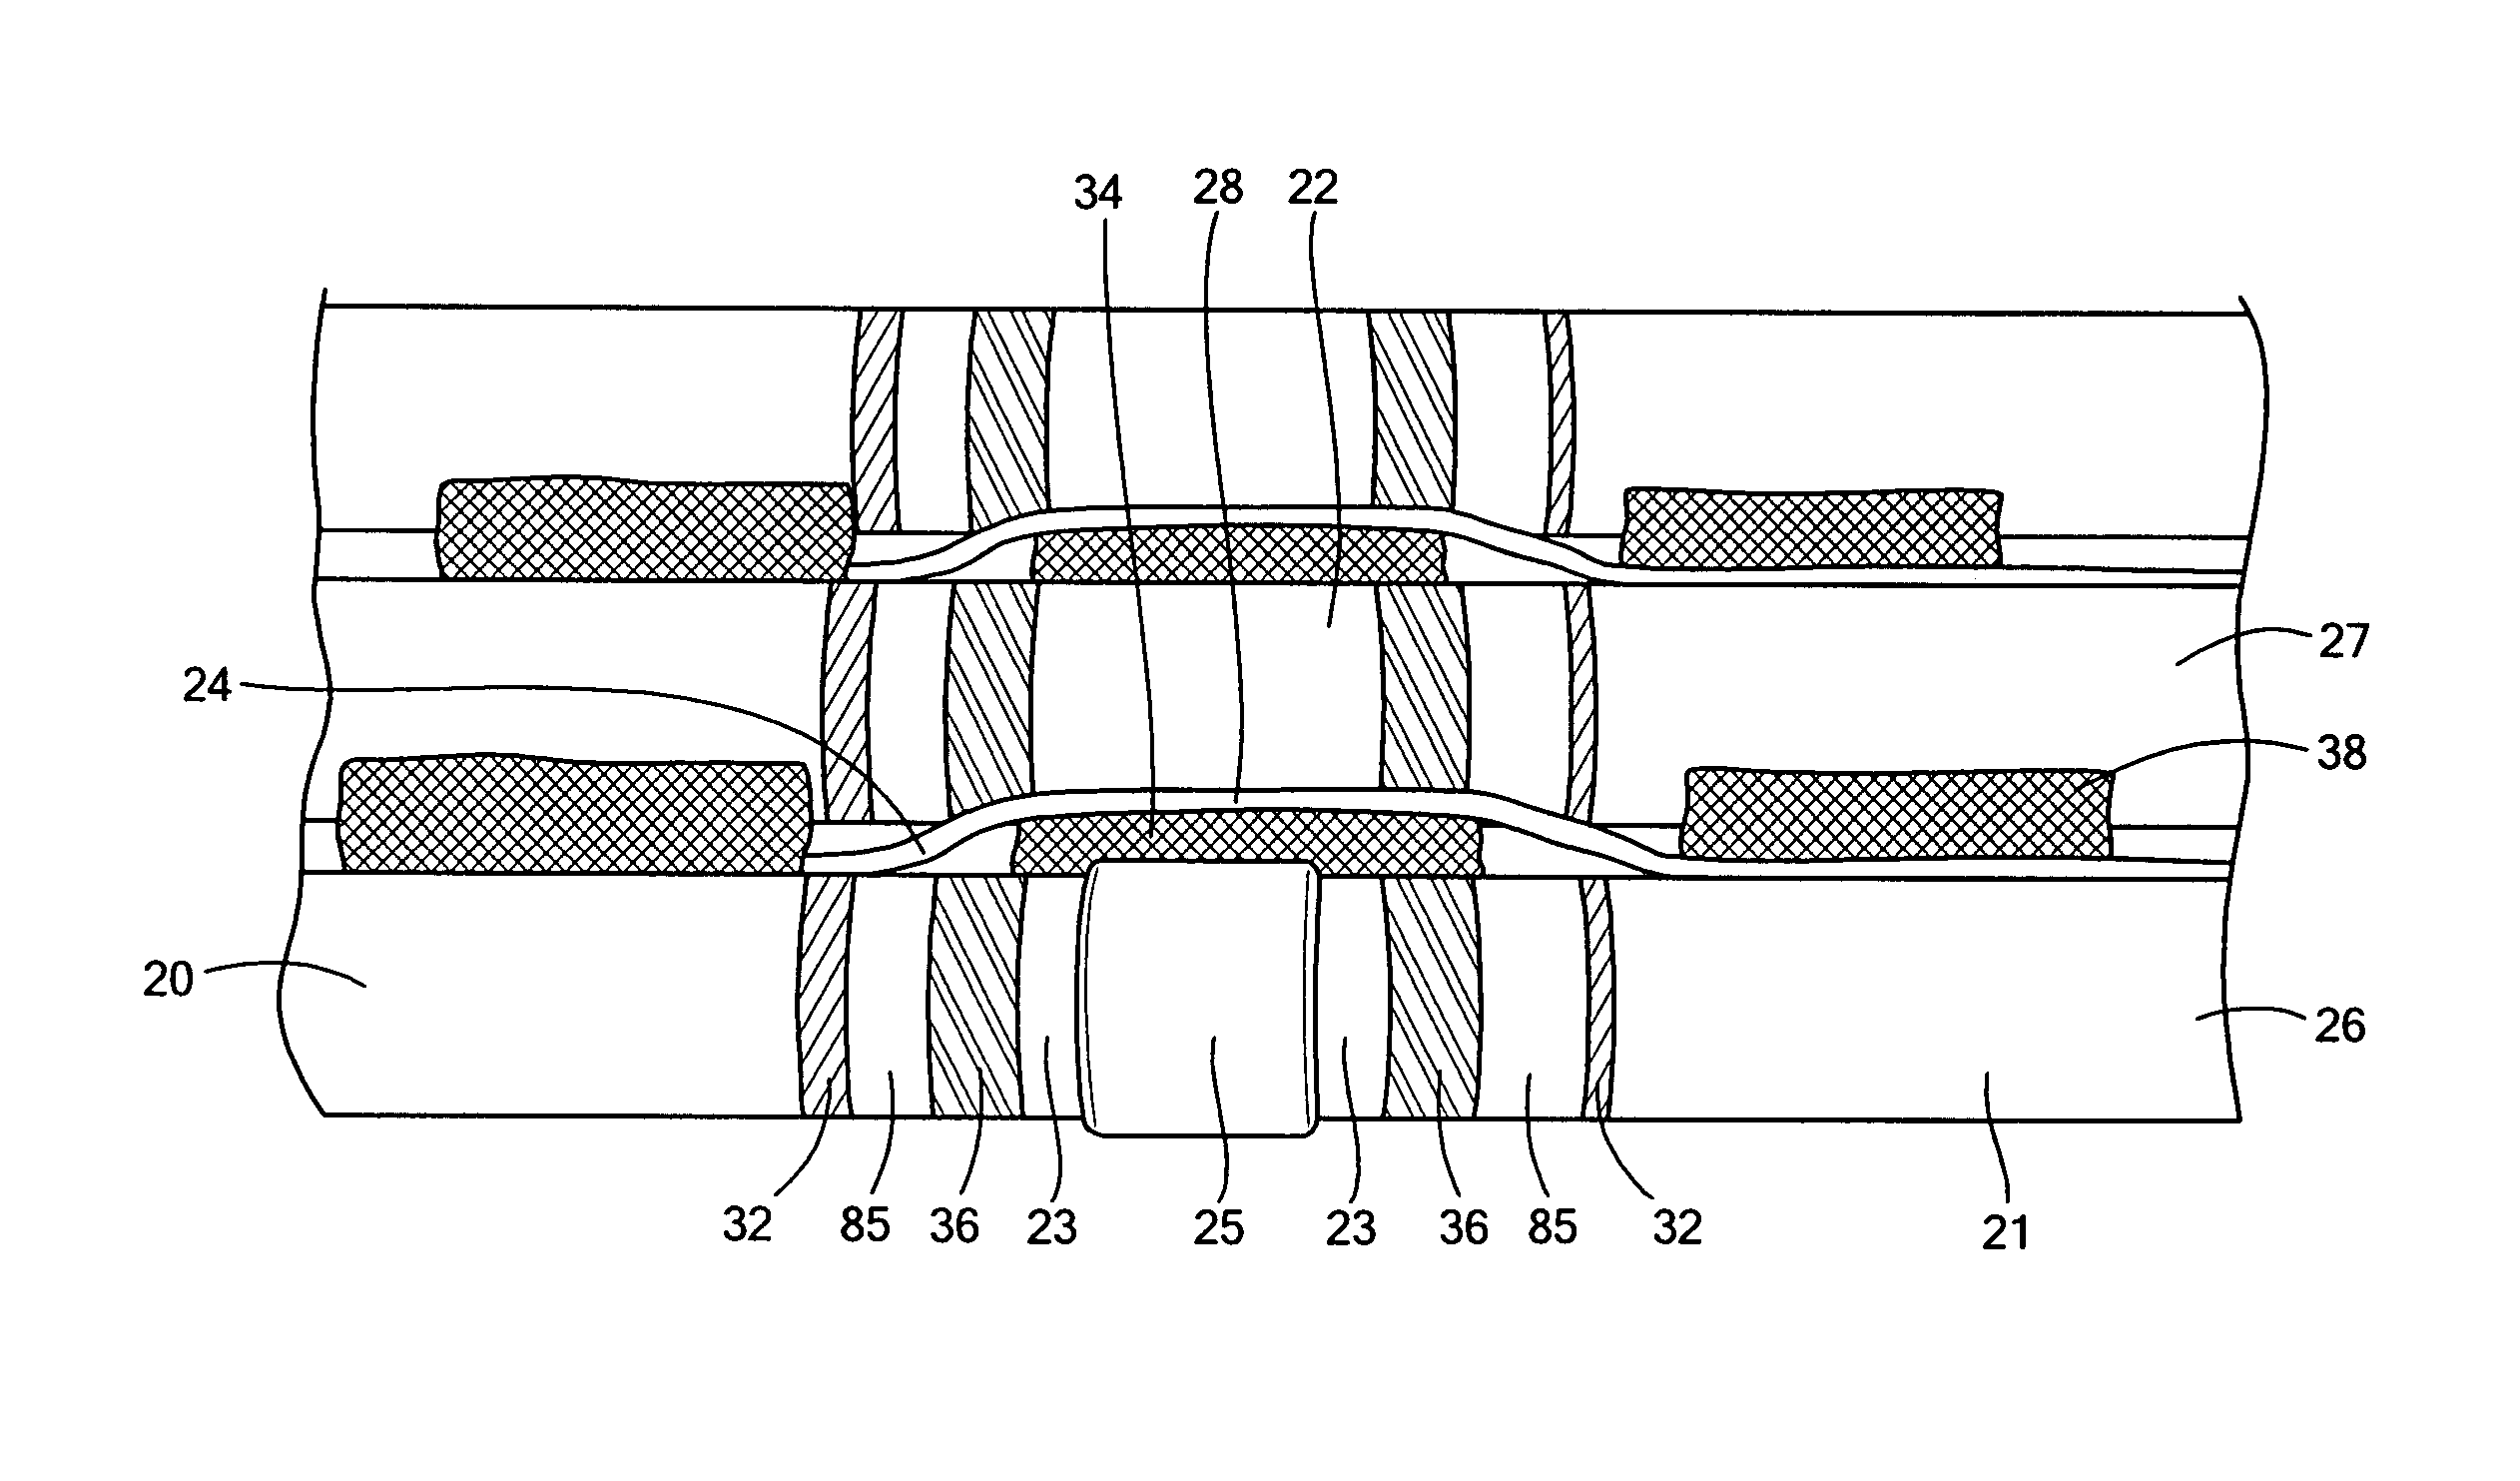 Interconnection of bundled solid oxide fuel cells